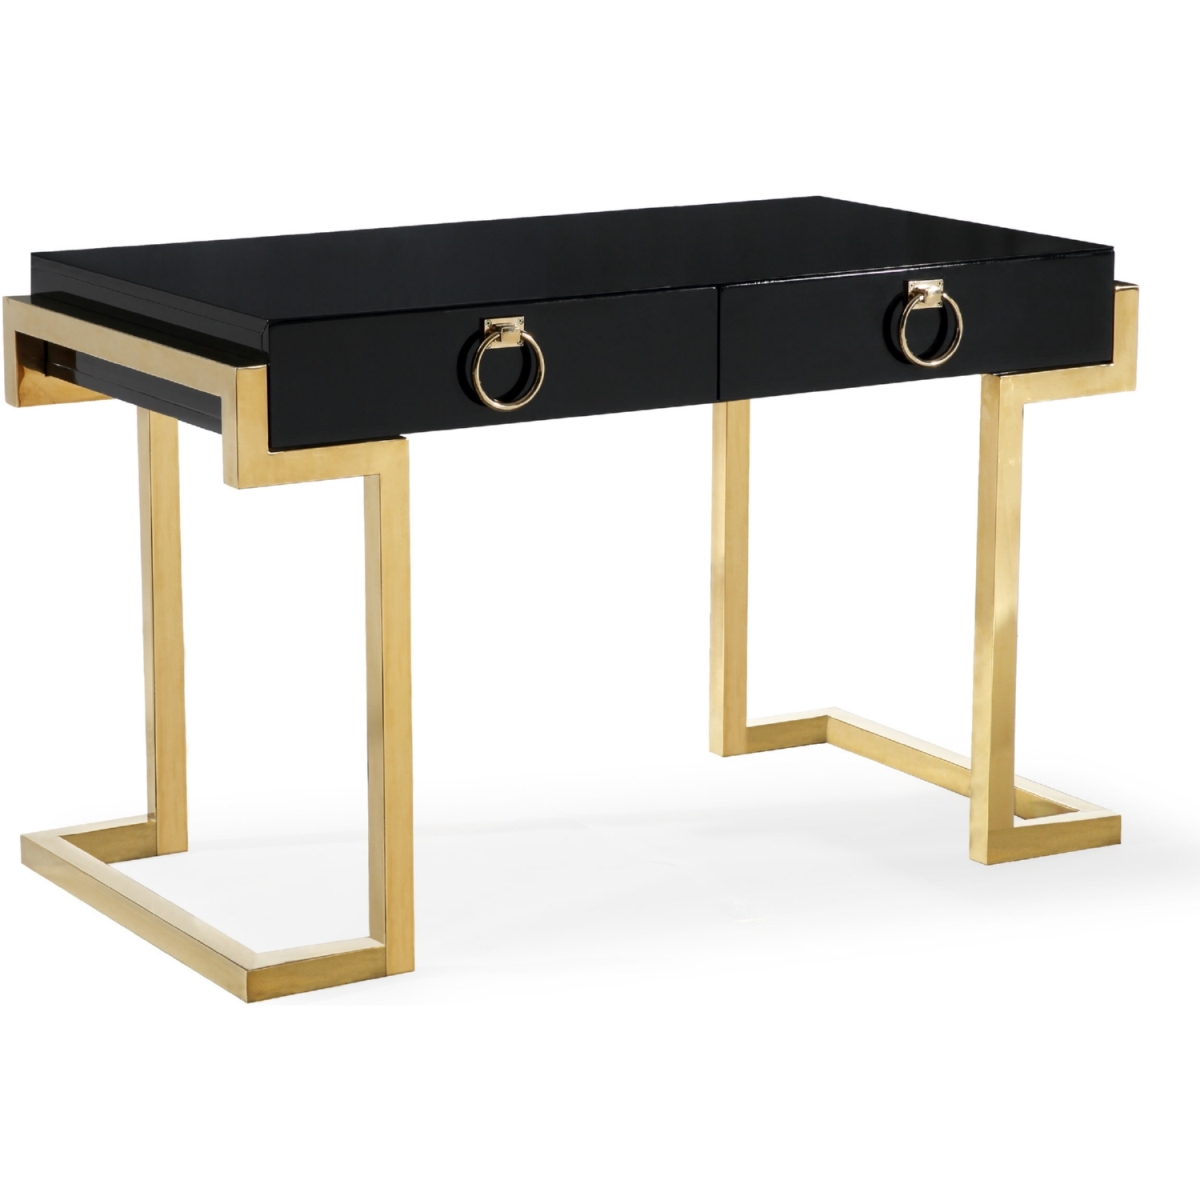 Tov-g5491 Majesty Desk With Gold Steel Base